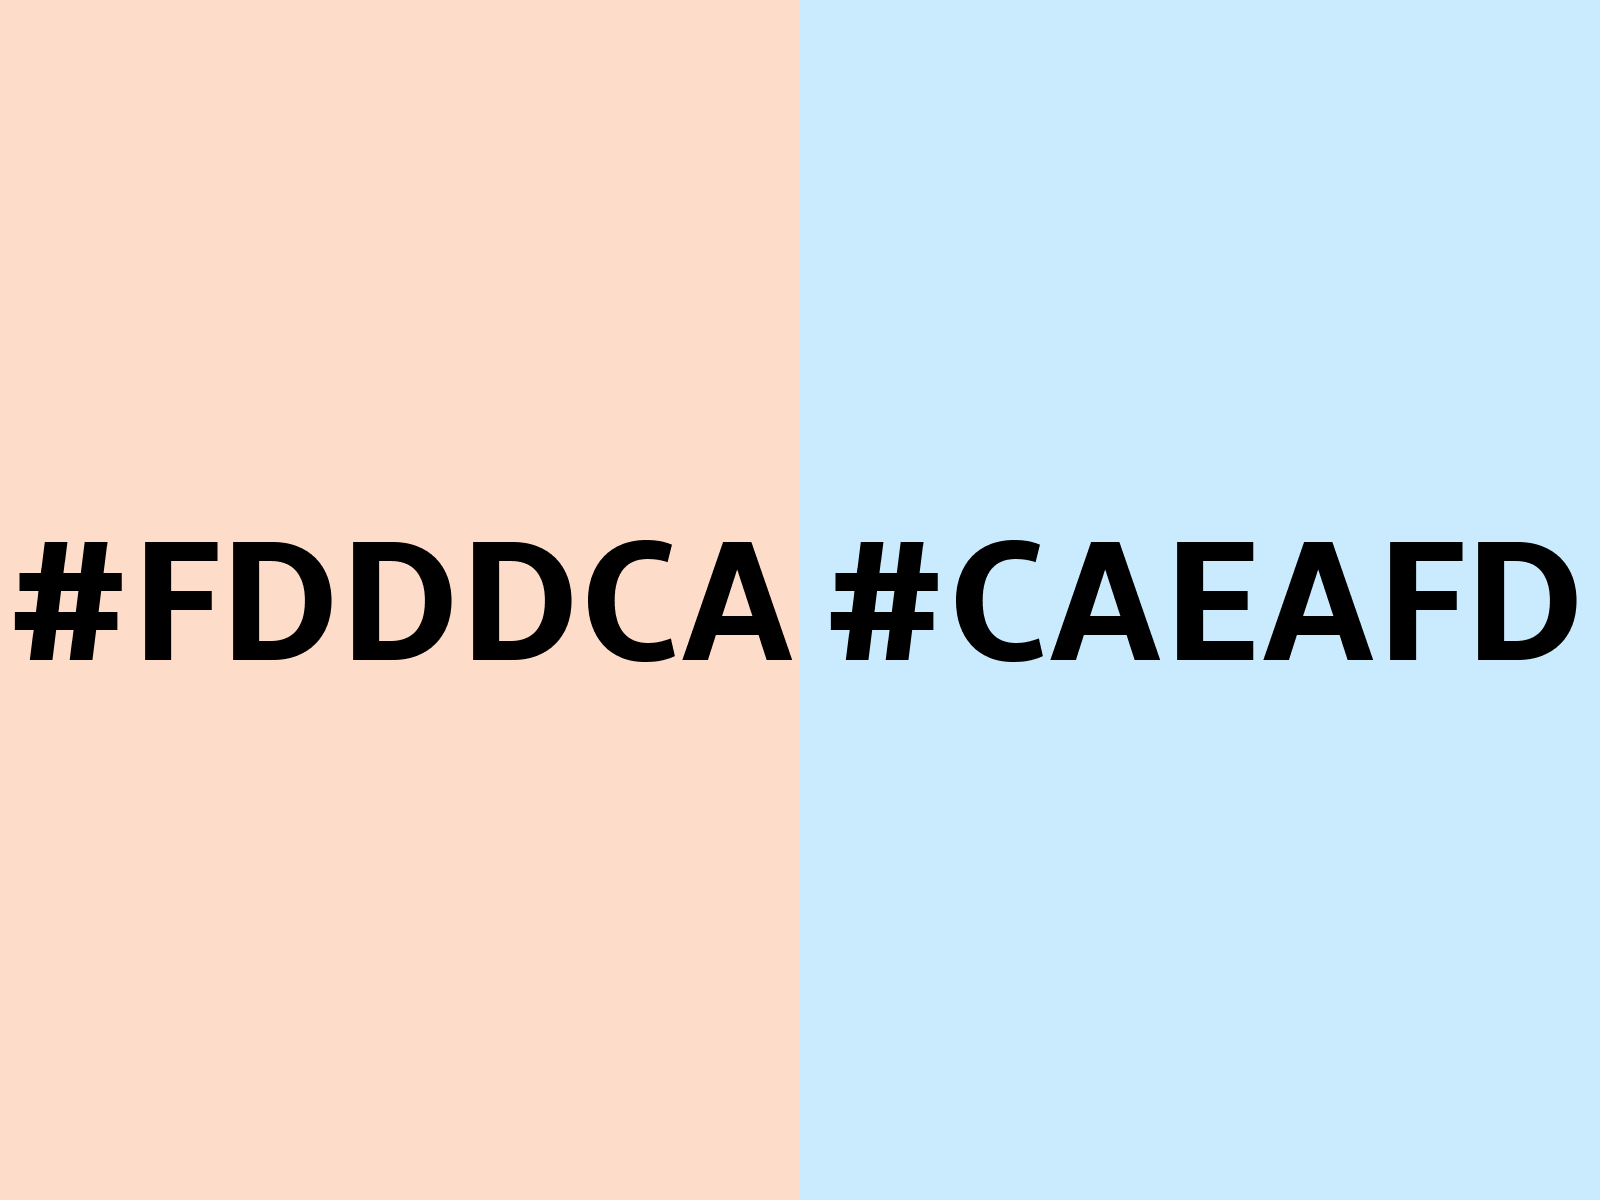 fdddca Hex Color Code, RGB and Paints